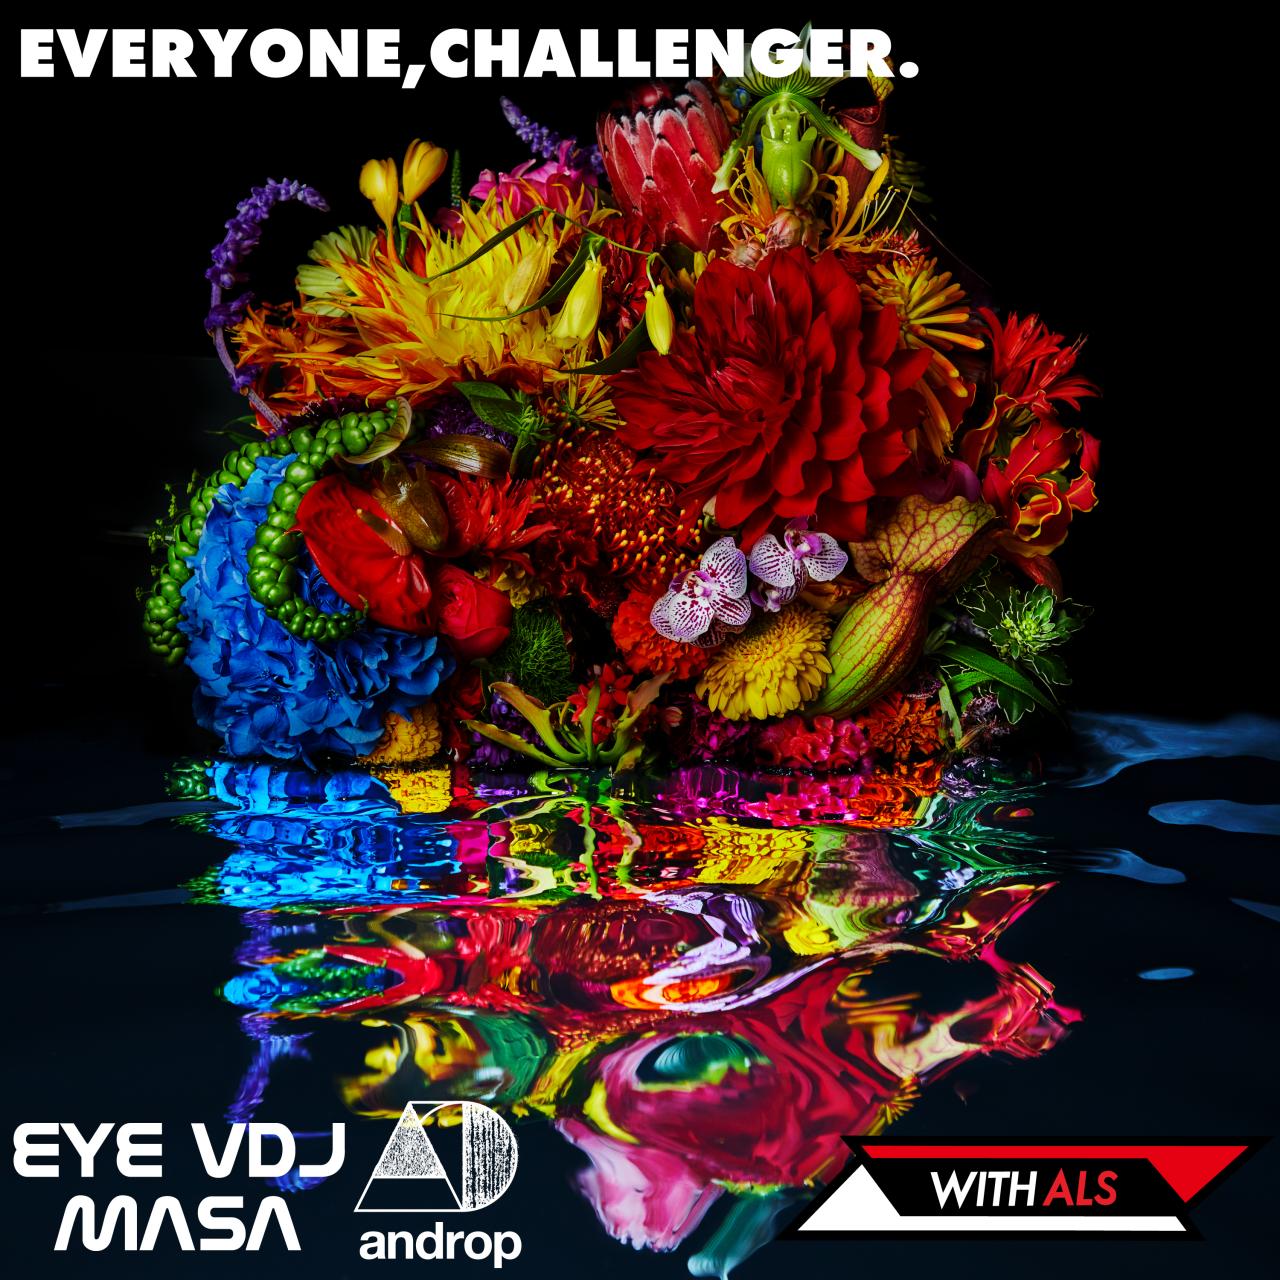 vol.30『EVERYONE, CHALLENGER.』Release!1/28楽曲・アパレル発売開始 ...